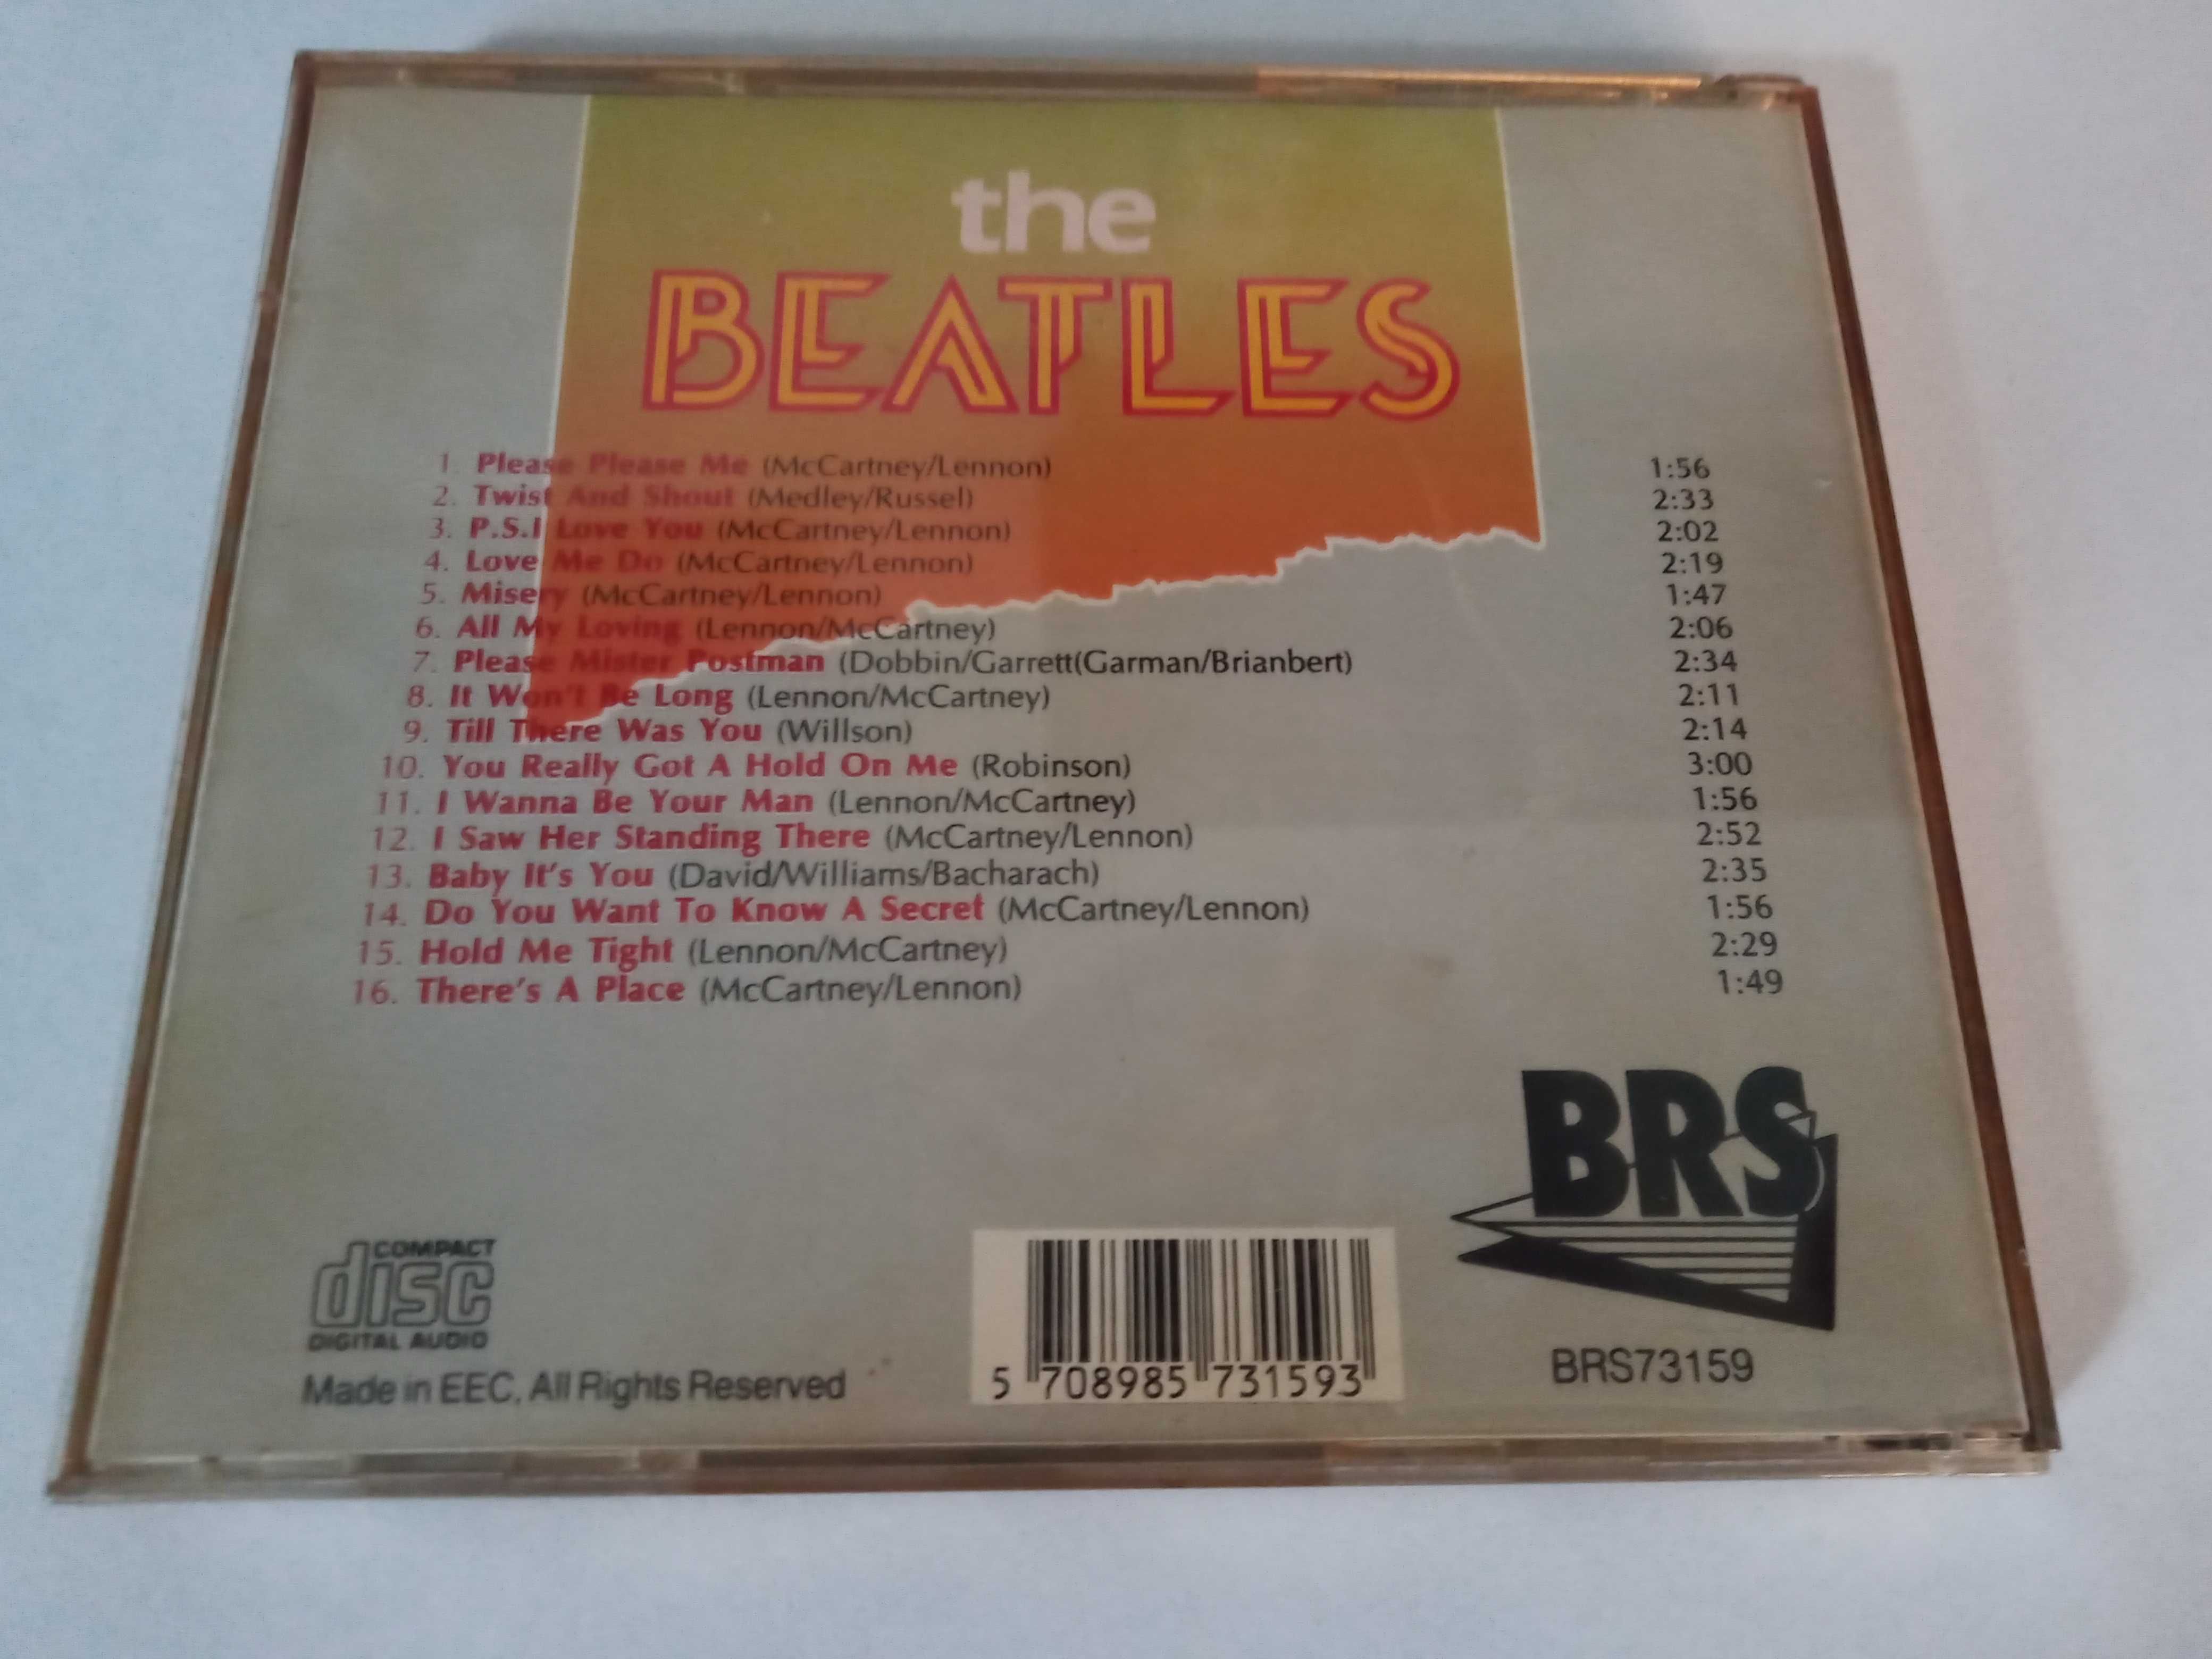 Płyta CD The Beatles "The Beatles" wyd. BRS